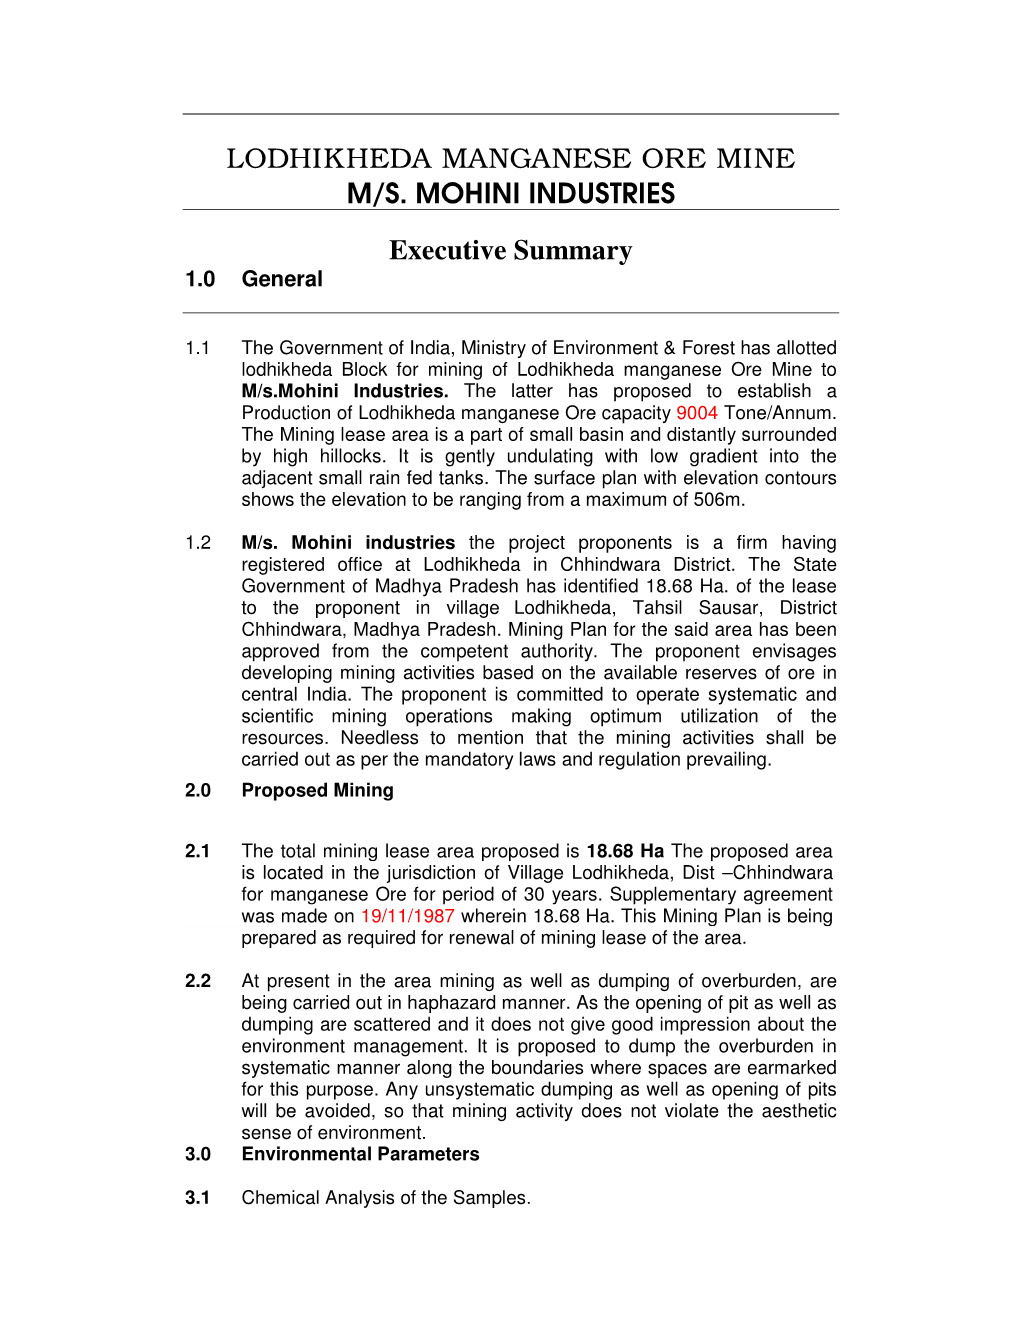 LODHIKHEDA MANGANESE ORE MINE M/S. MOHINI INDUSTRIES Executive Summary